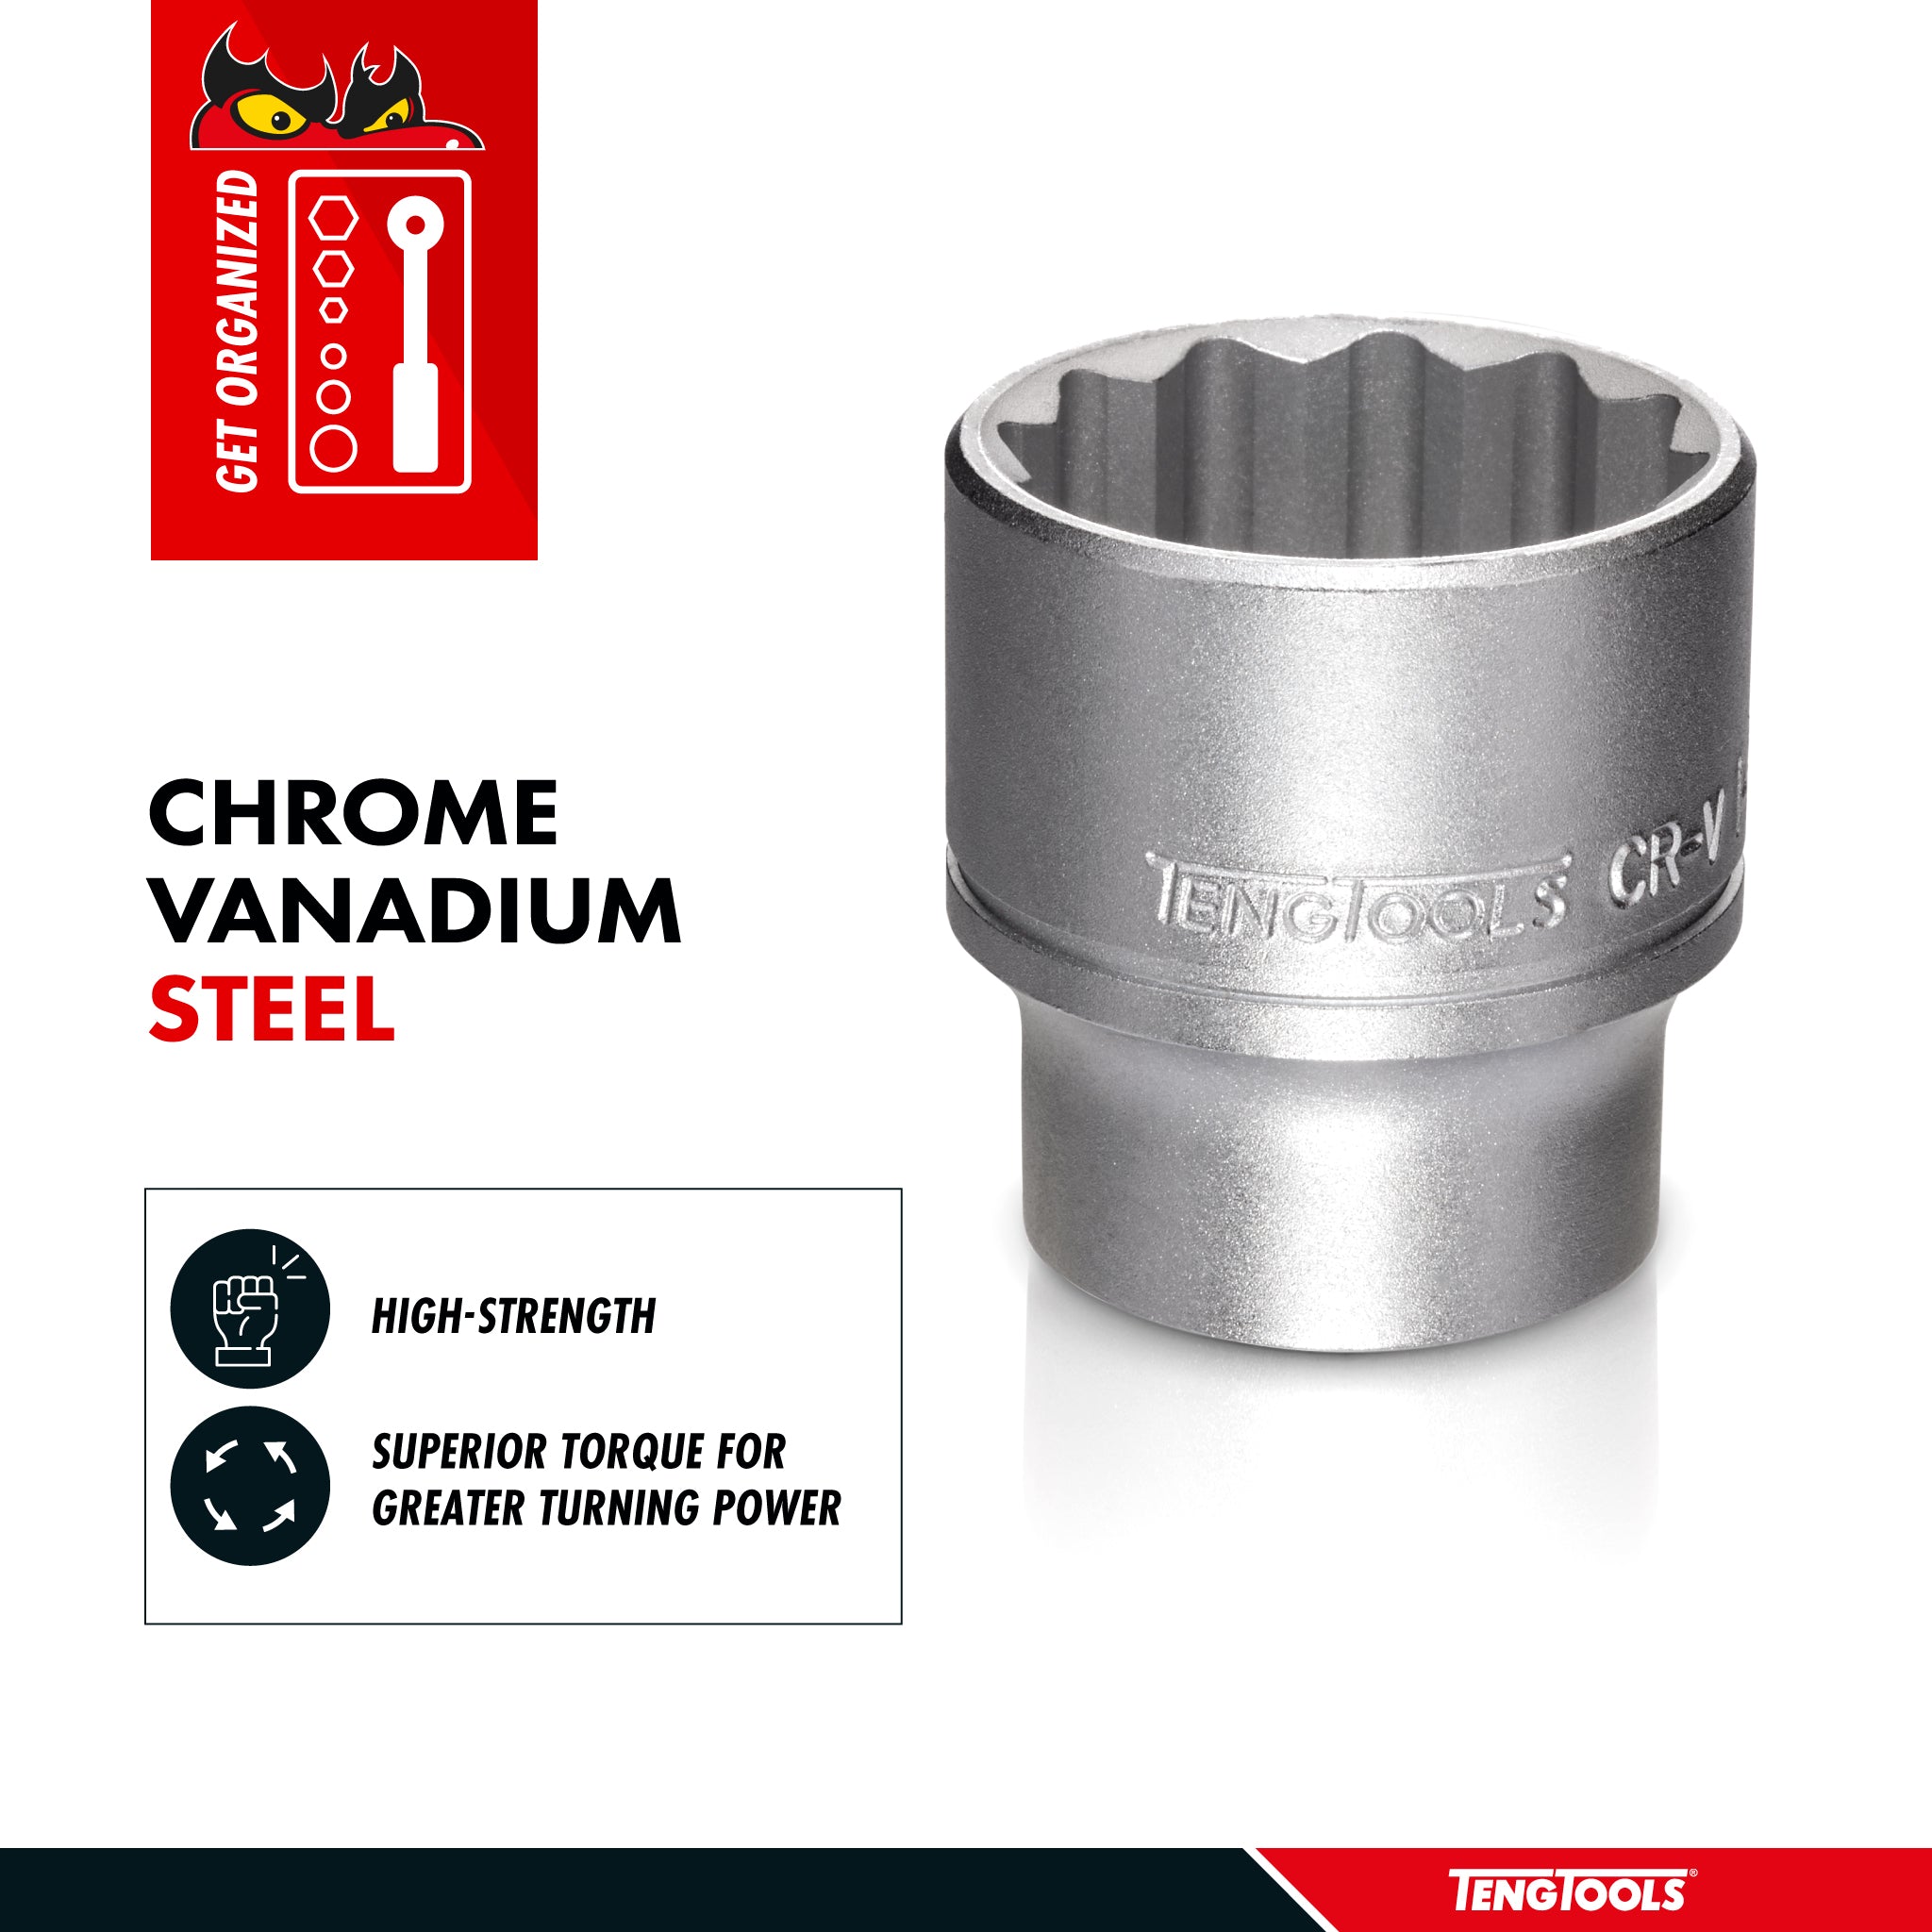 Teng Tools 1/2 Inch Drive 12 Point Metric Shallow Chrome Vanadium Sockets - 24mm